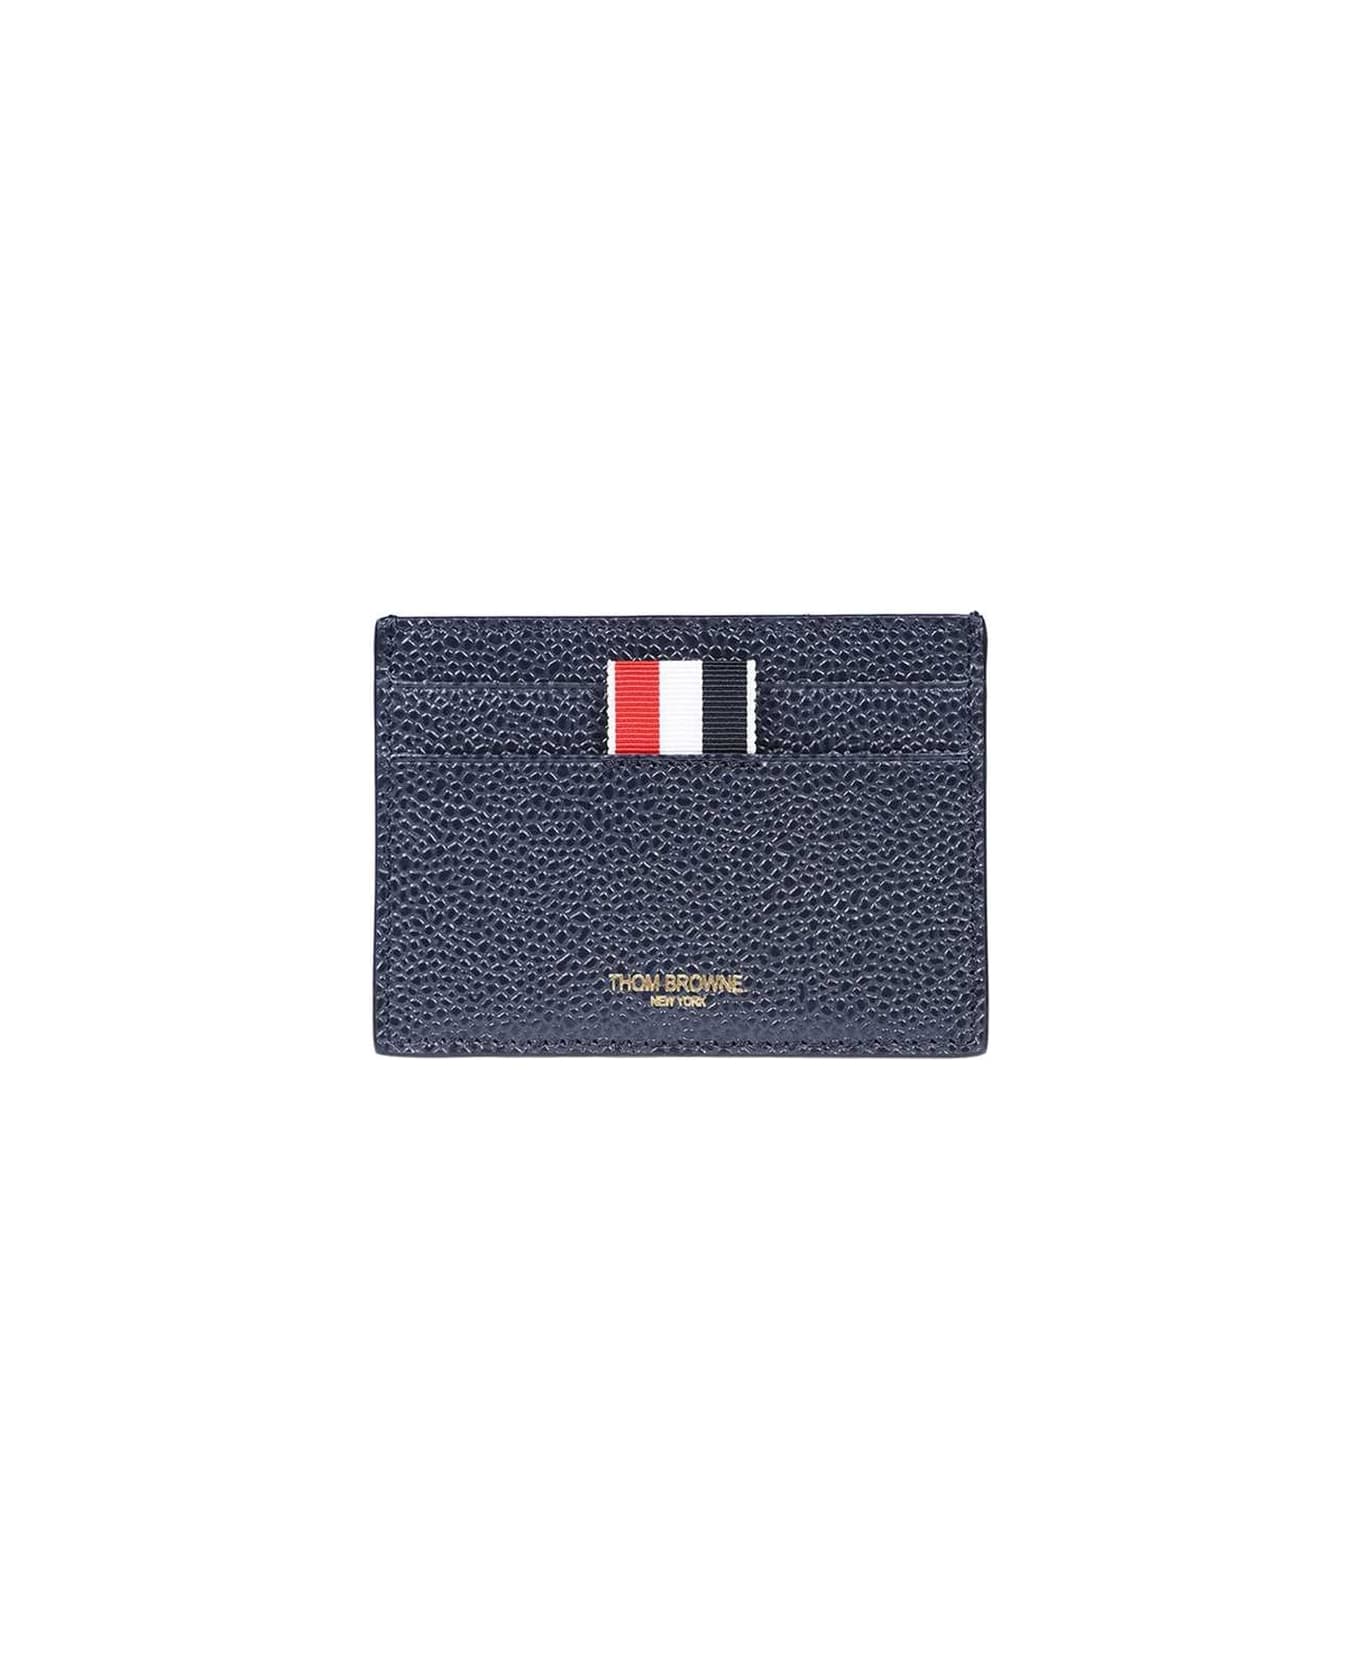 Thom Browne Leather Card Holder - Blue